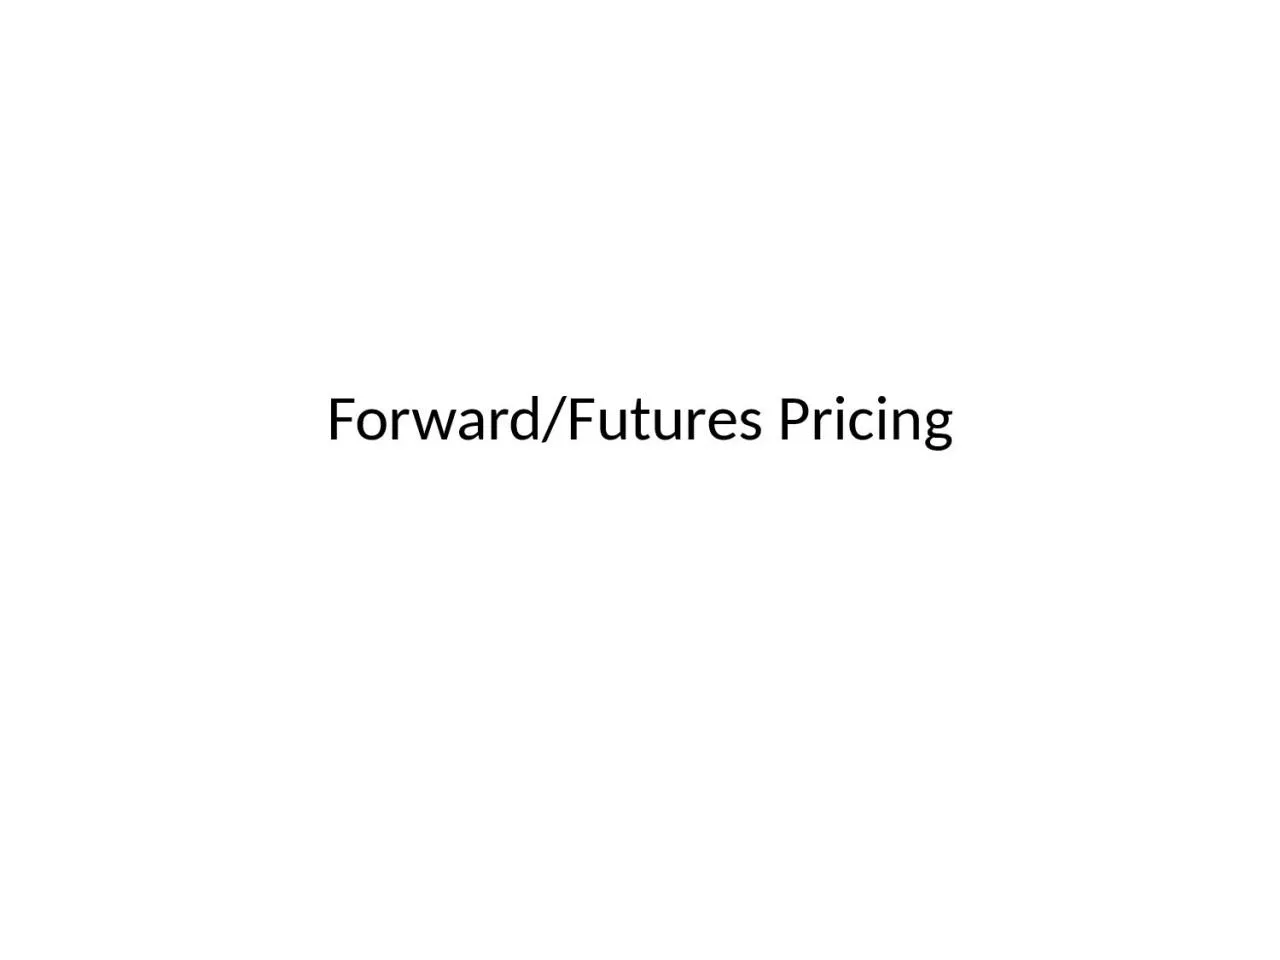 Forward/Futures Pricing Financial Derivatives